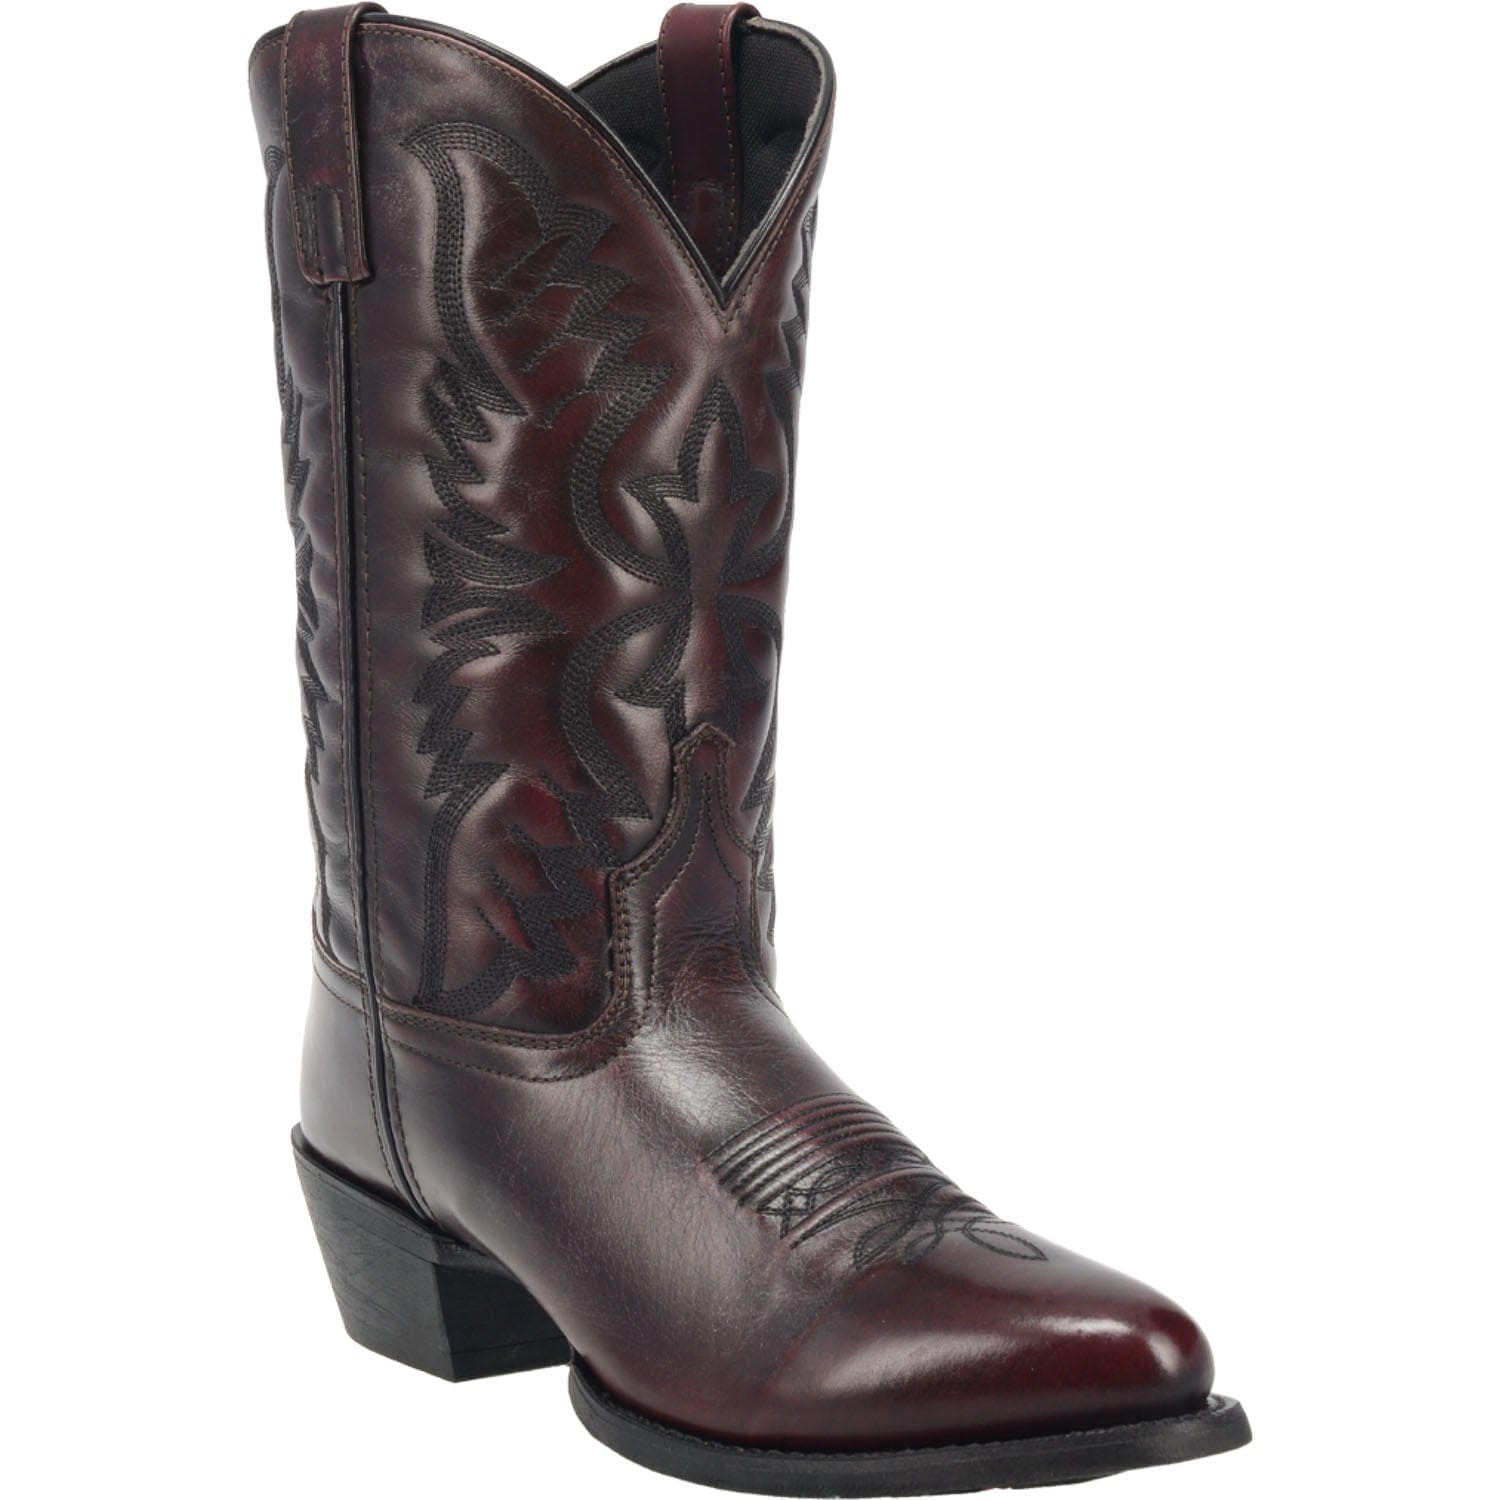 LAREDO Boots Laredo Men's Birchwood Black Cherry Leather Cowboy Boots 68458